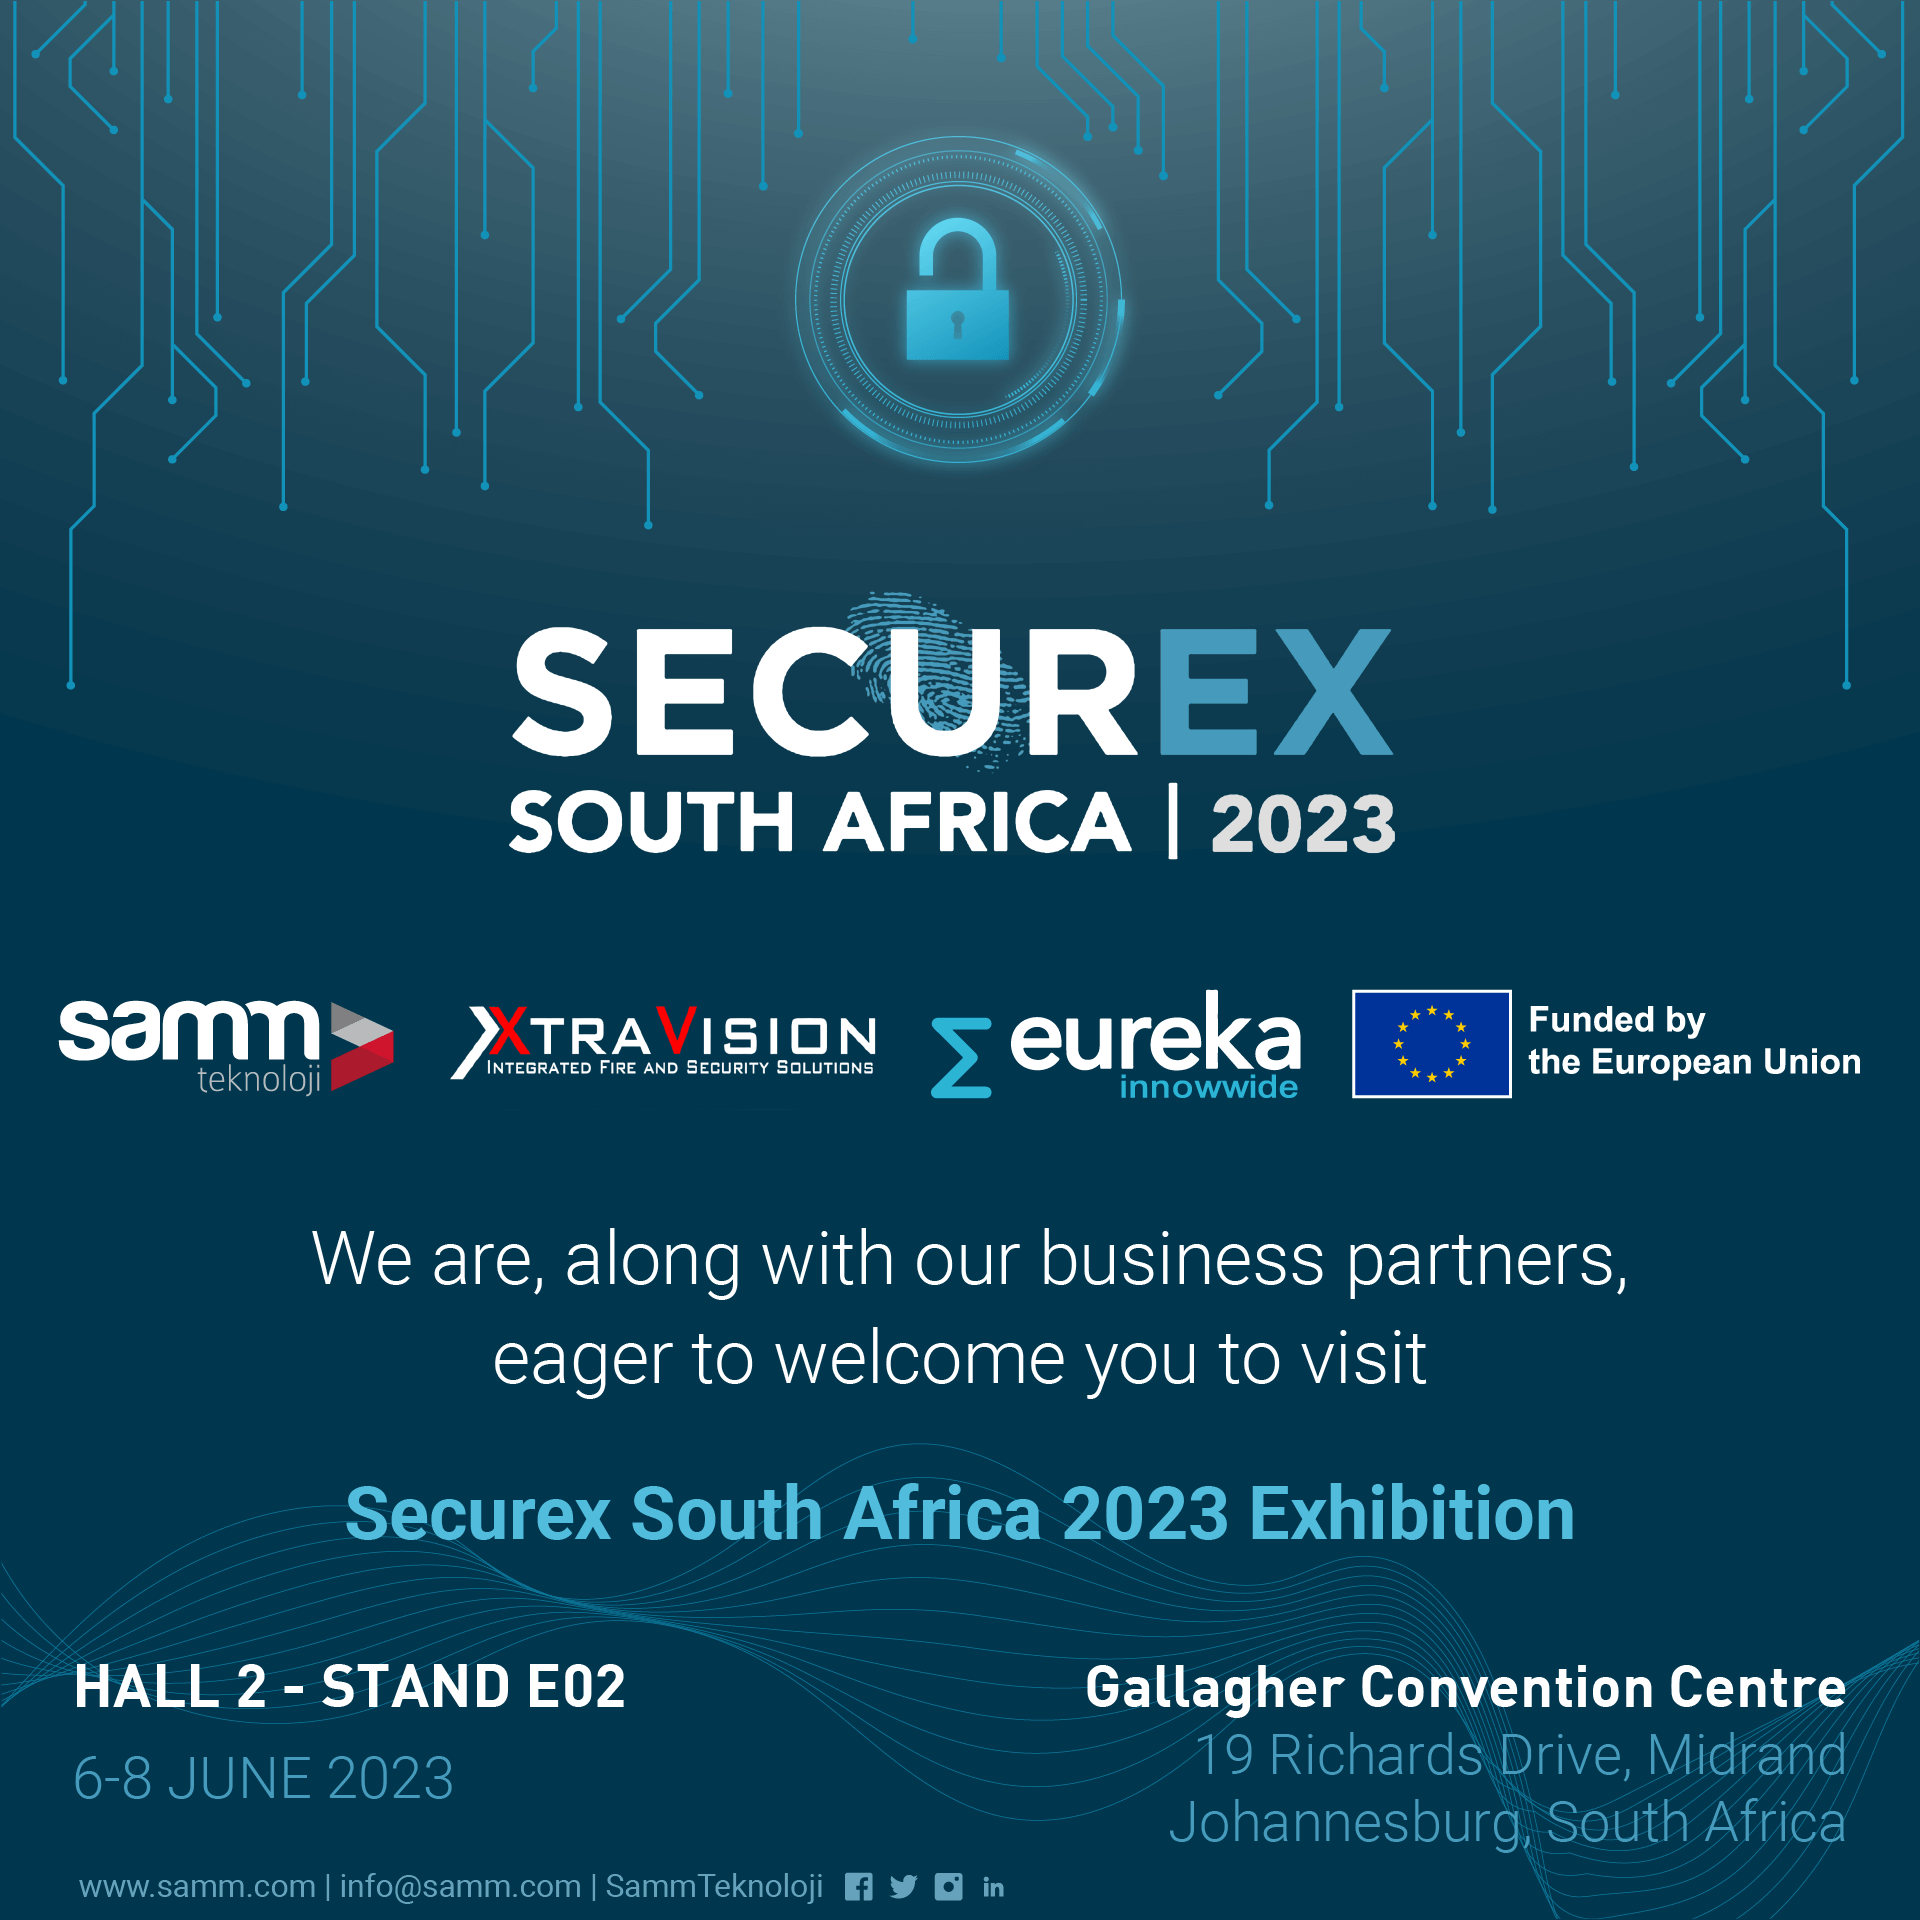 Securex South Africa 2023 Exhibition